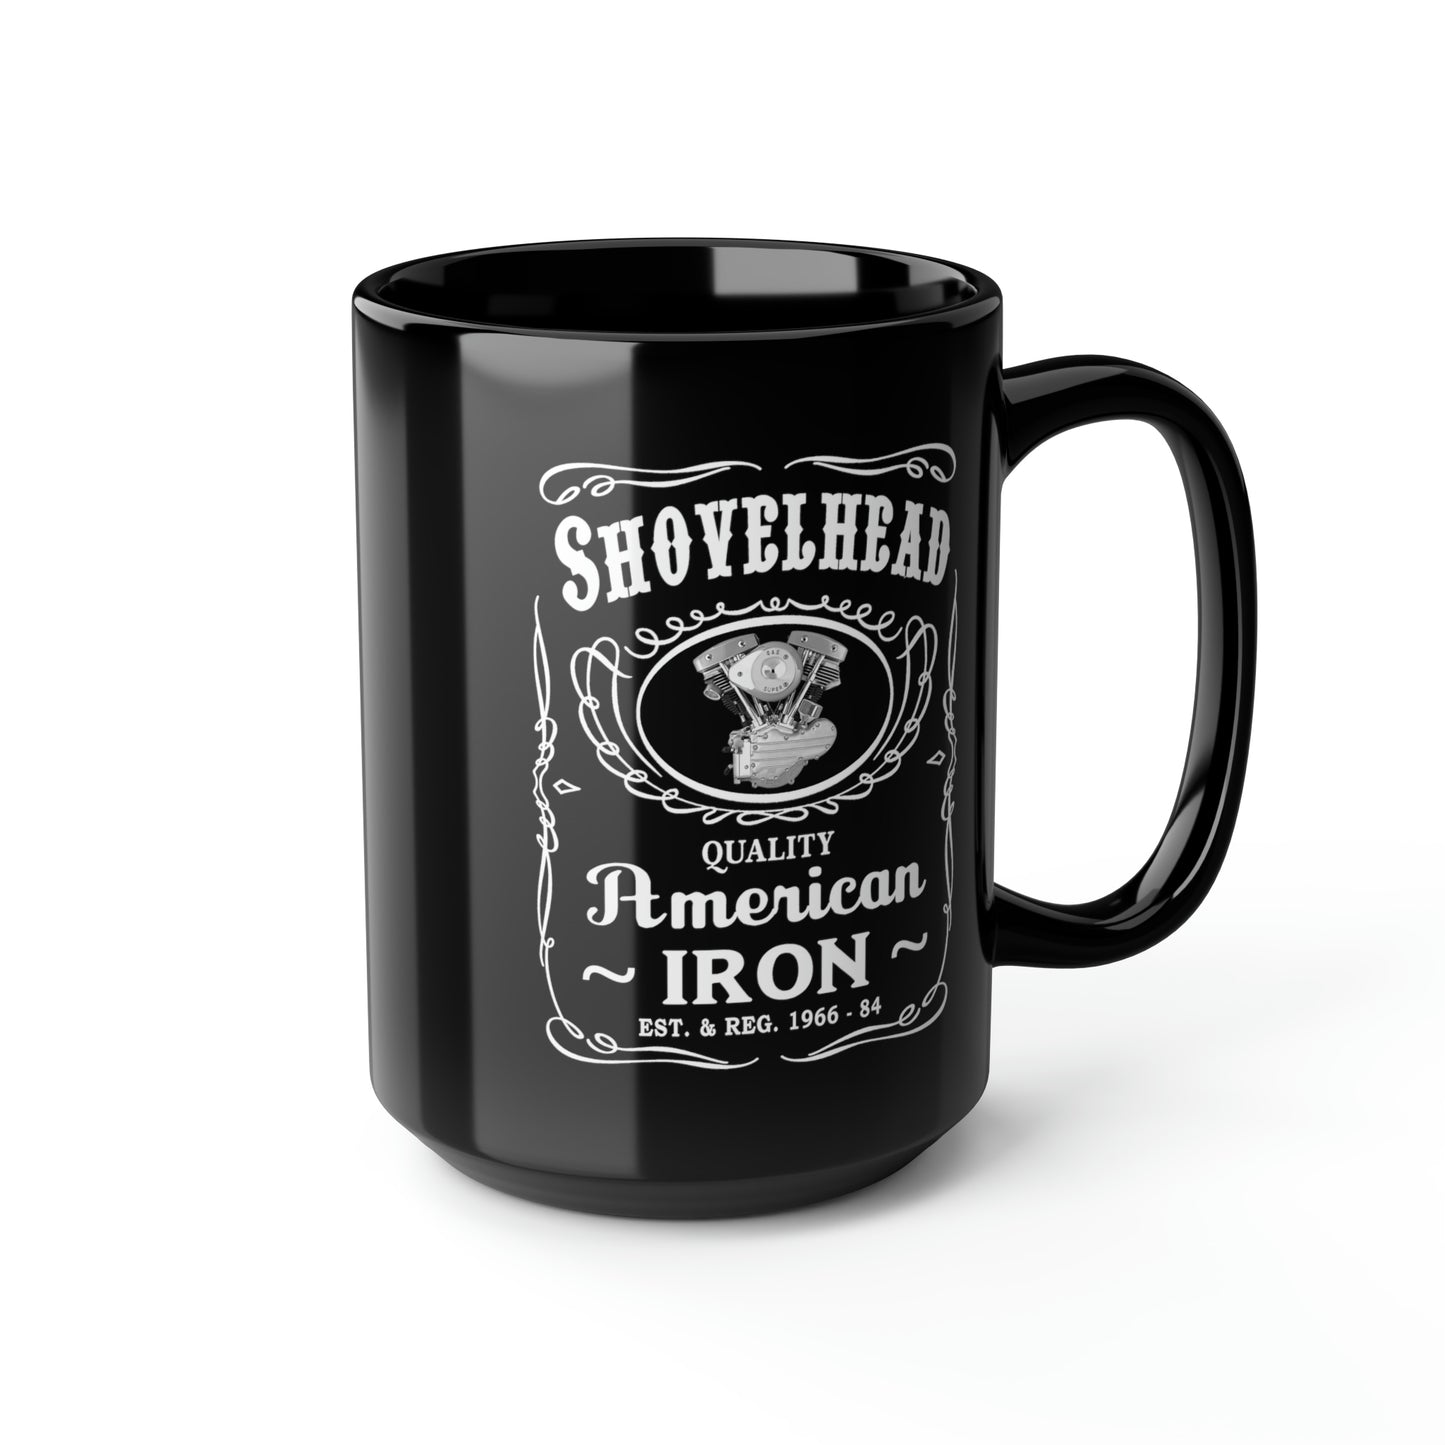 SHOVELHEAD 4 (JD GENERATOR) Black Mug, 15oz